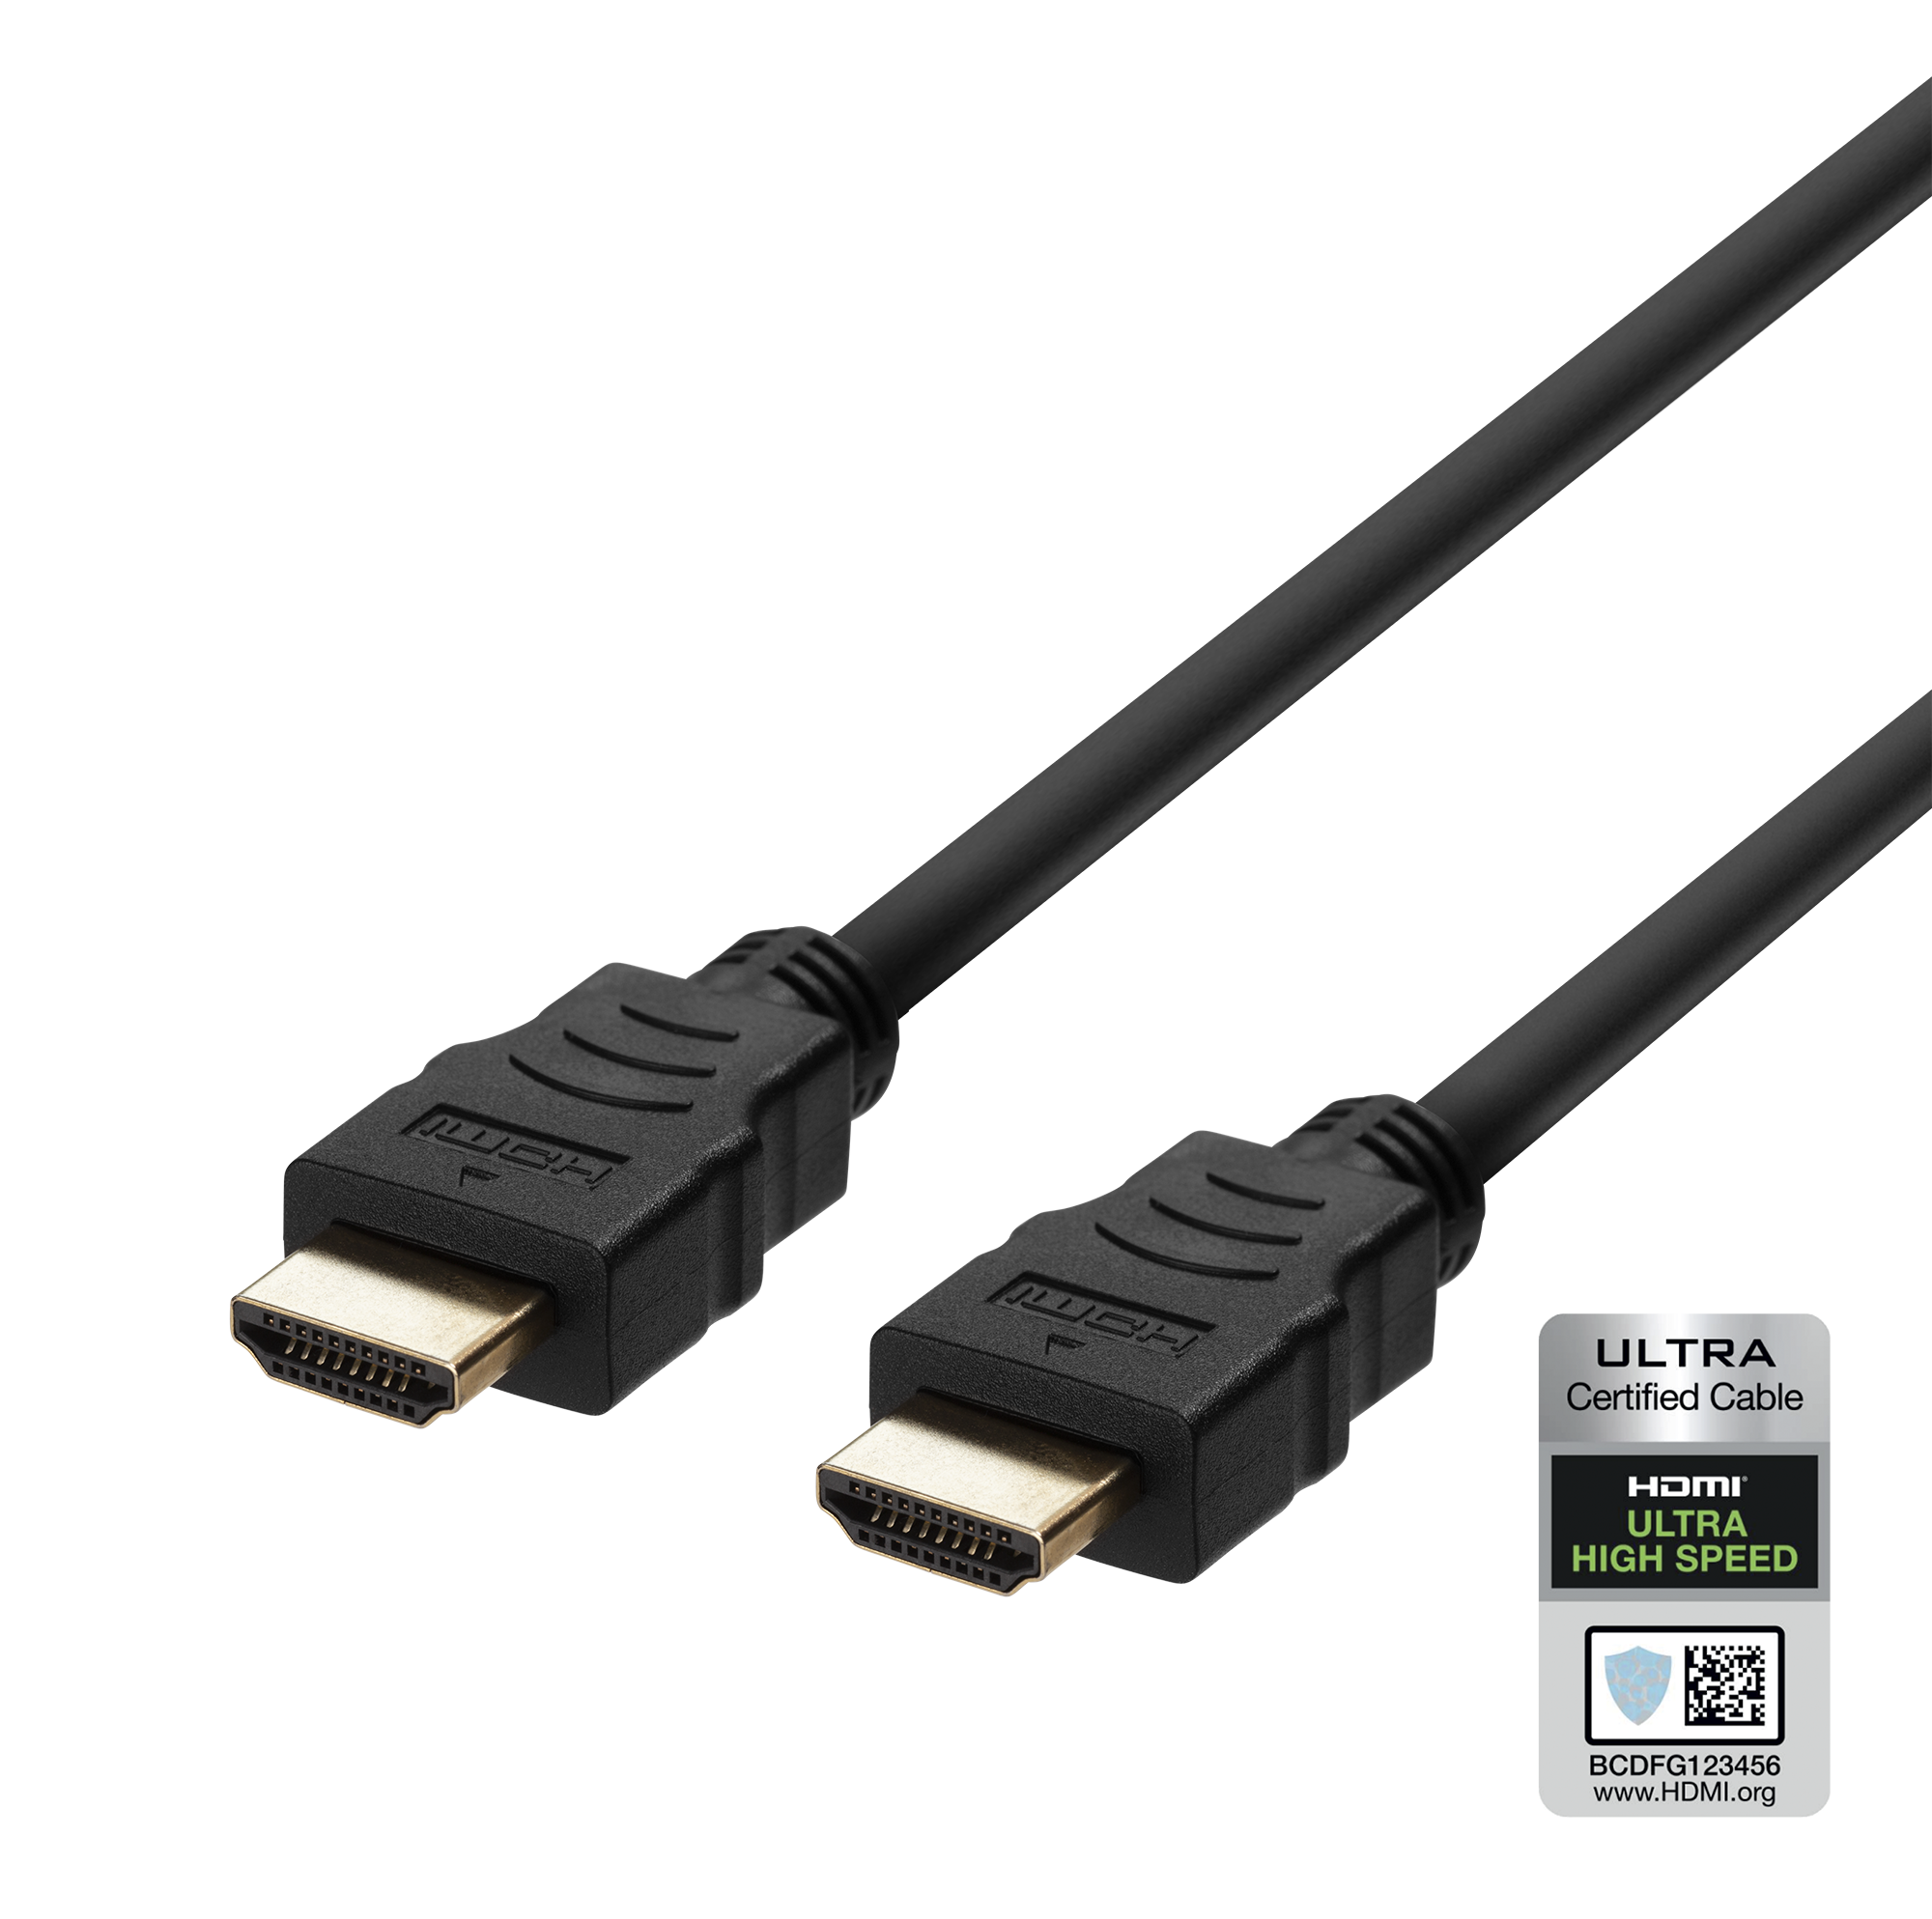 Cable DELTACO Ultra High Speed HDMI, ARC, QMS, 8K in 60Hz, 4K UHD in 120Hz, 1m, black / HU-10-R